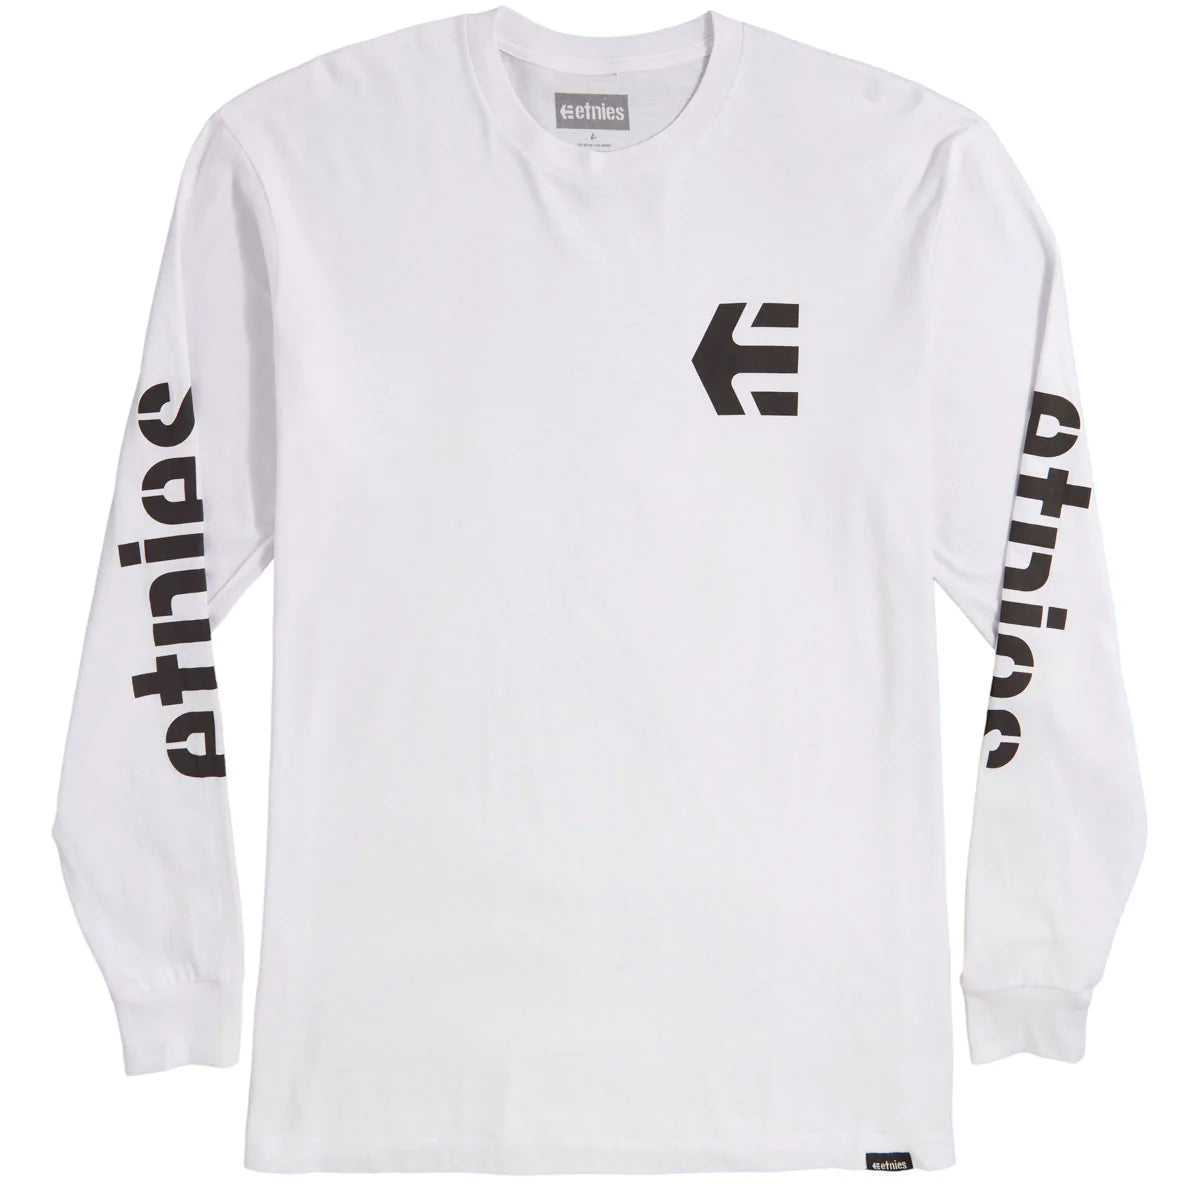 Etnies Icon Long Sleeve T-Shirt - White/Black image 1